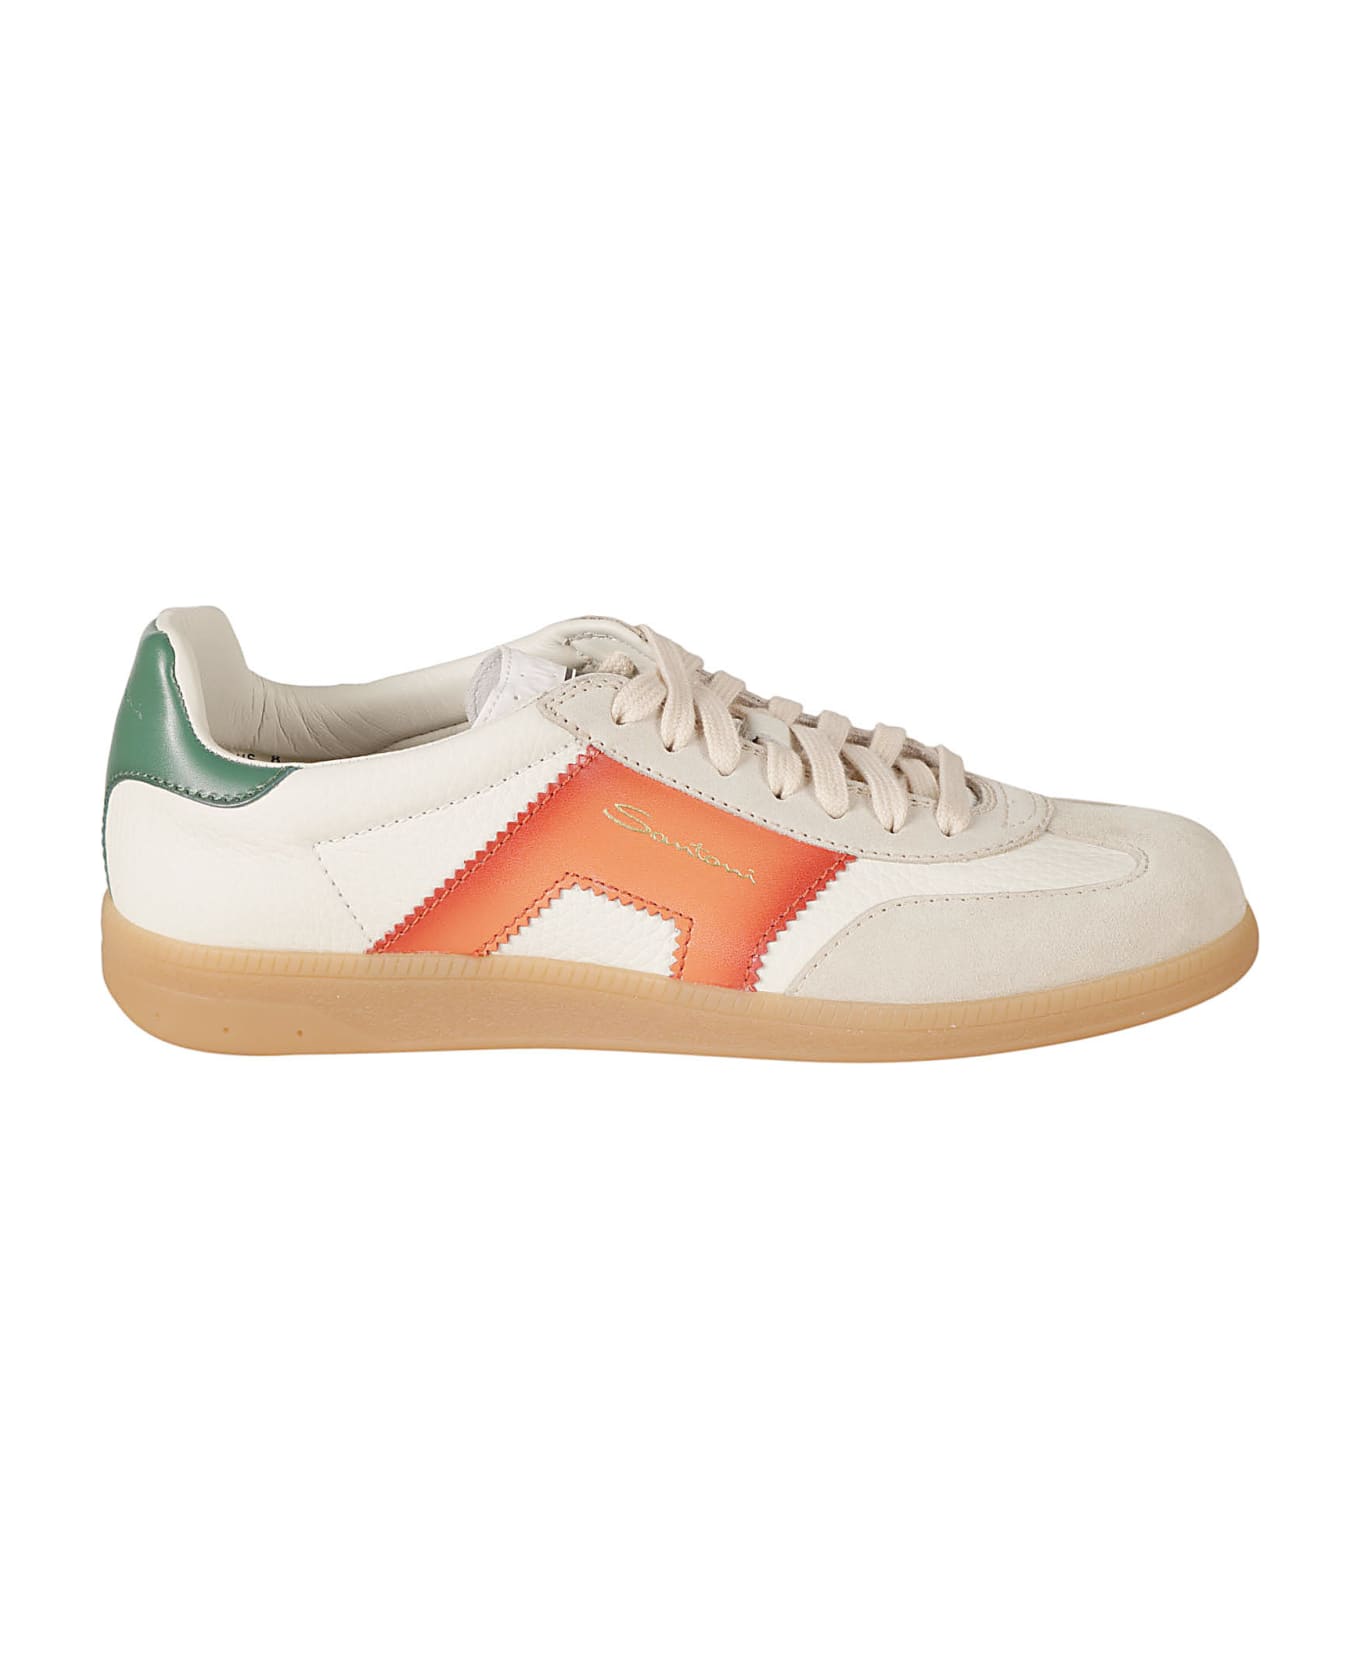 Santoni Evii88 Sneakers - Multicolor